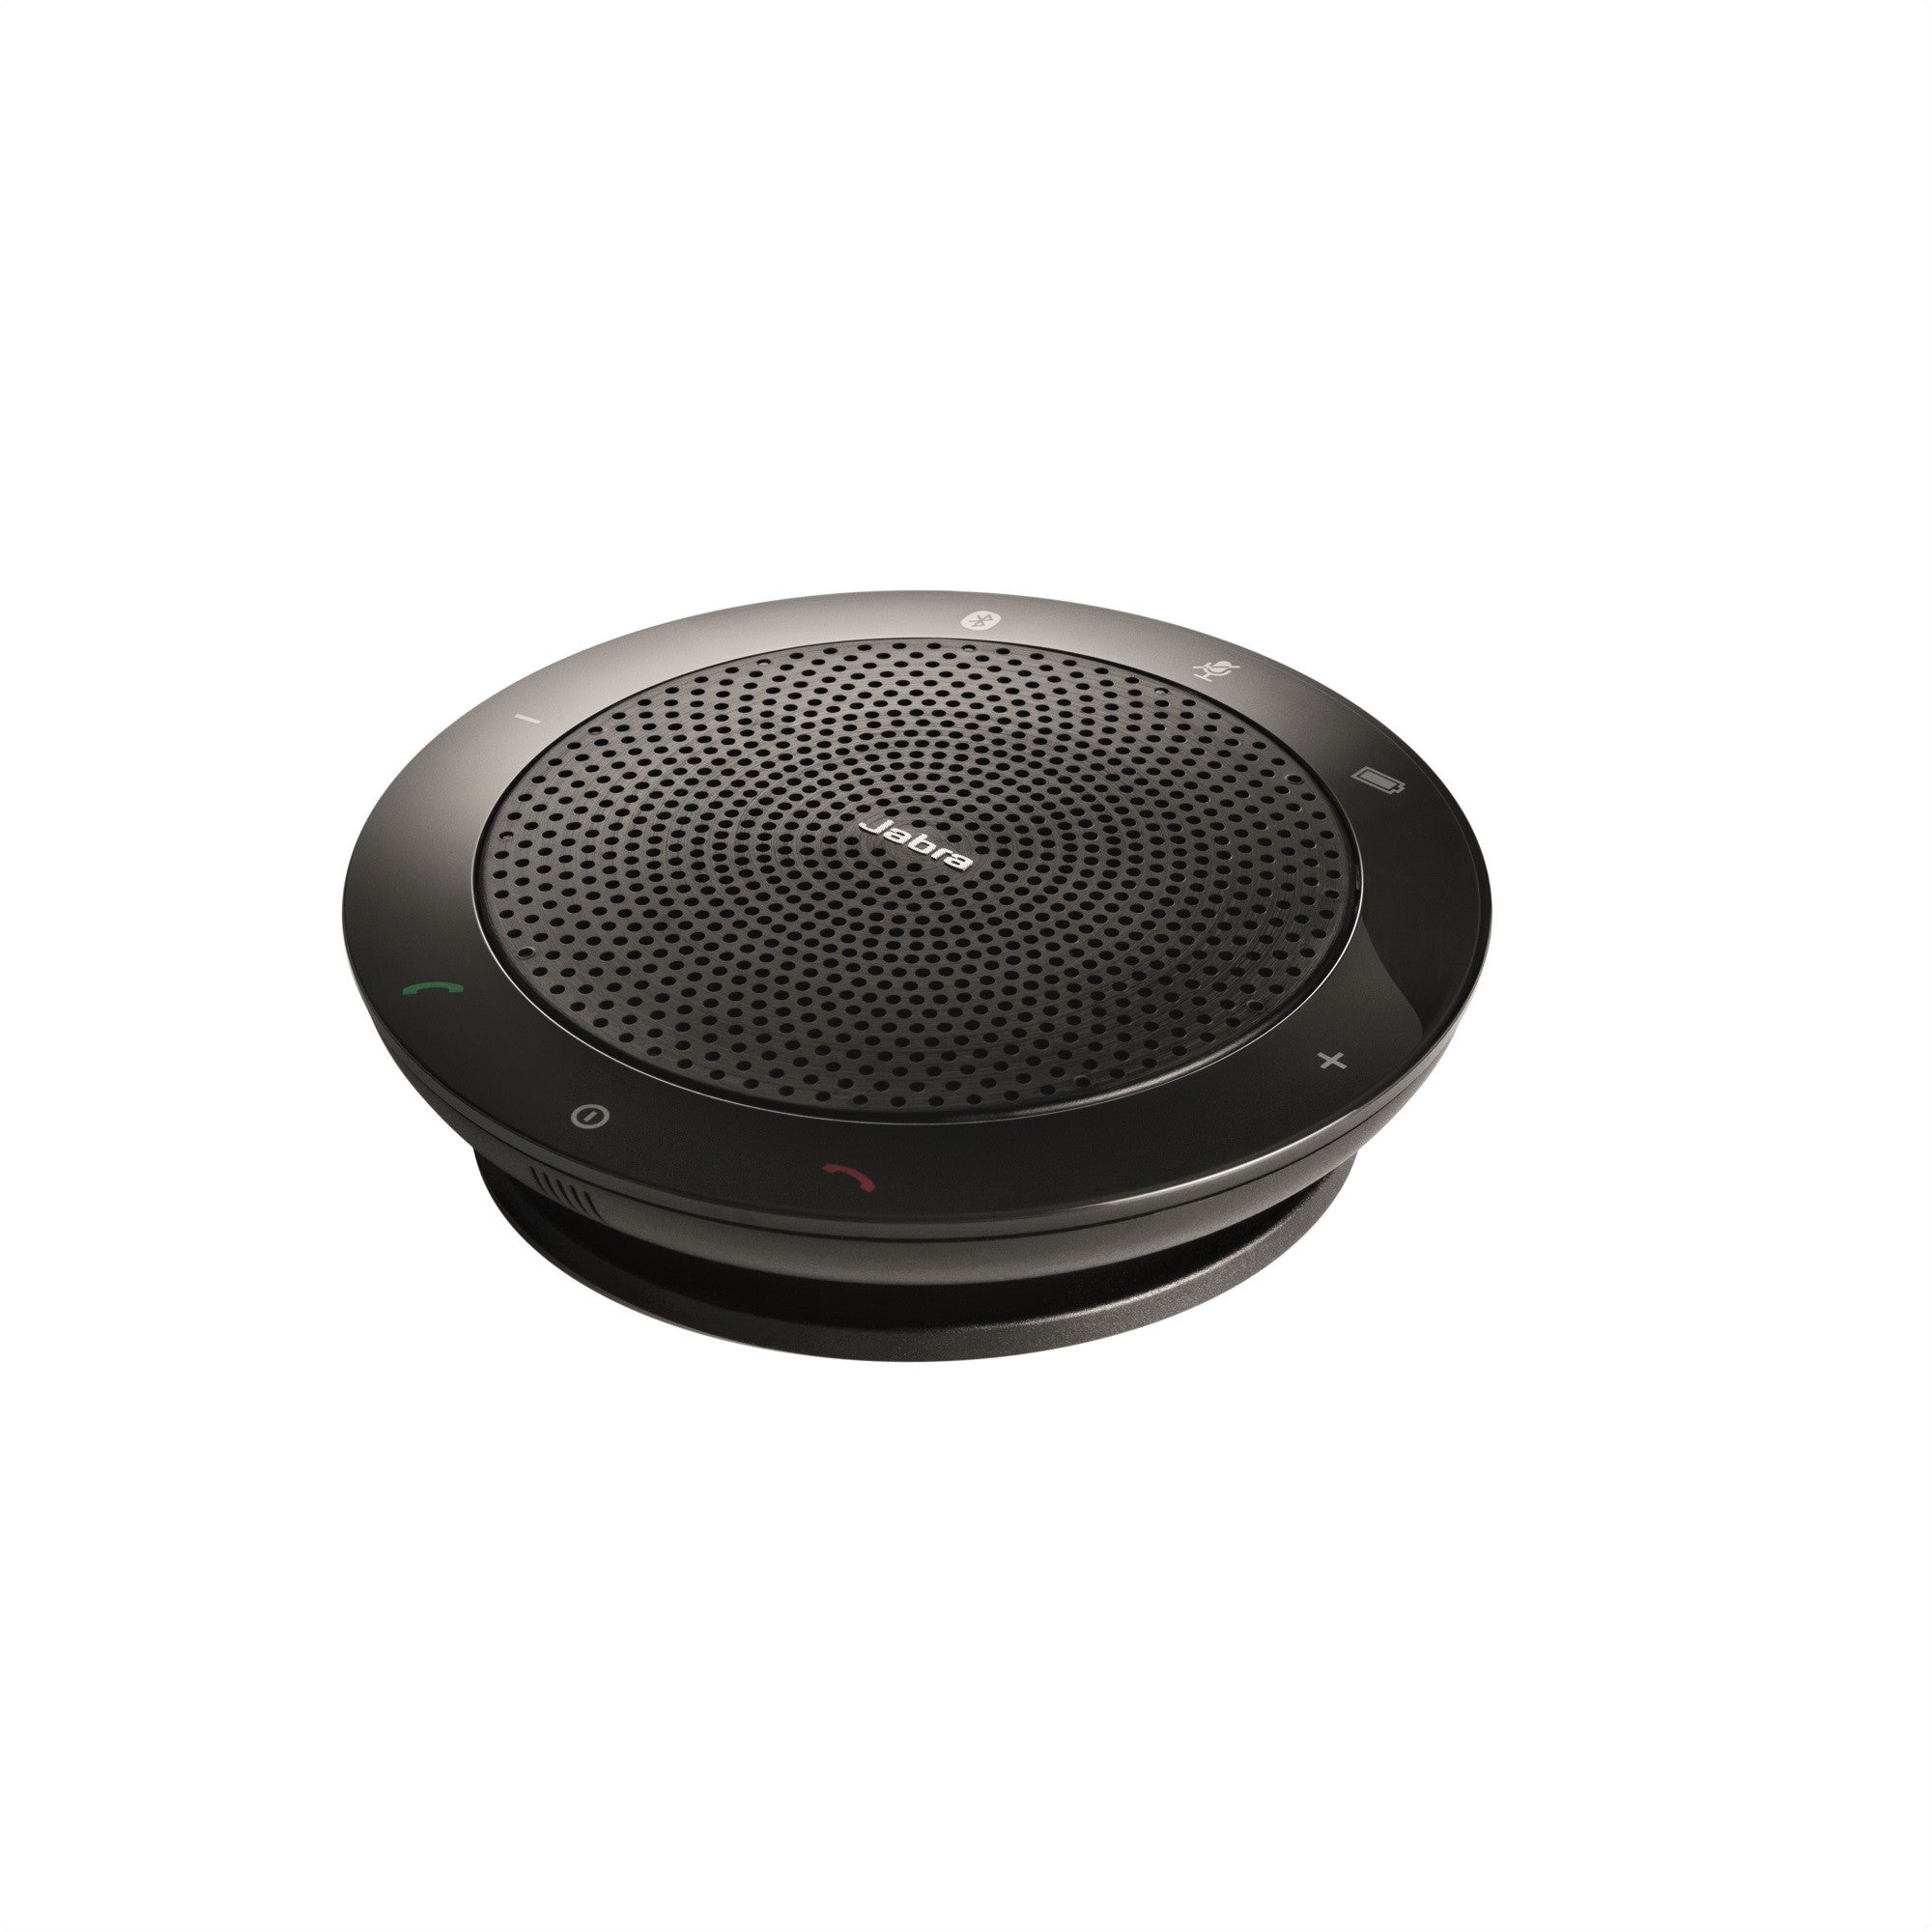 Jabra Speak 510 Bluetooth Speakerphone- Speaker for PC, MAC, Tablet, Smartphone Compatible